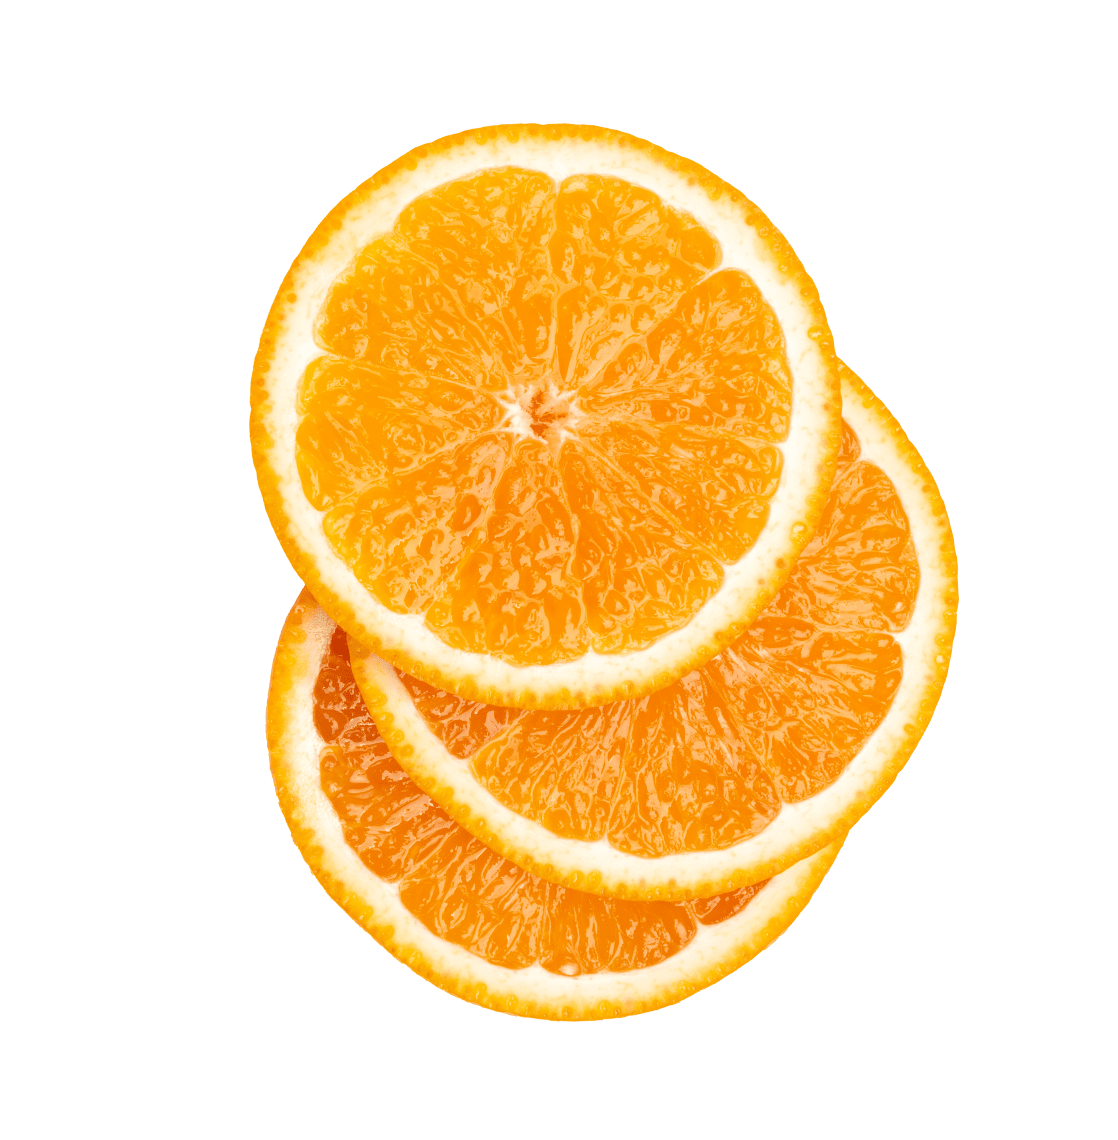 Mardena Orange Nectar ماردينا نكتار البرتقال